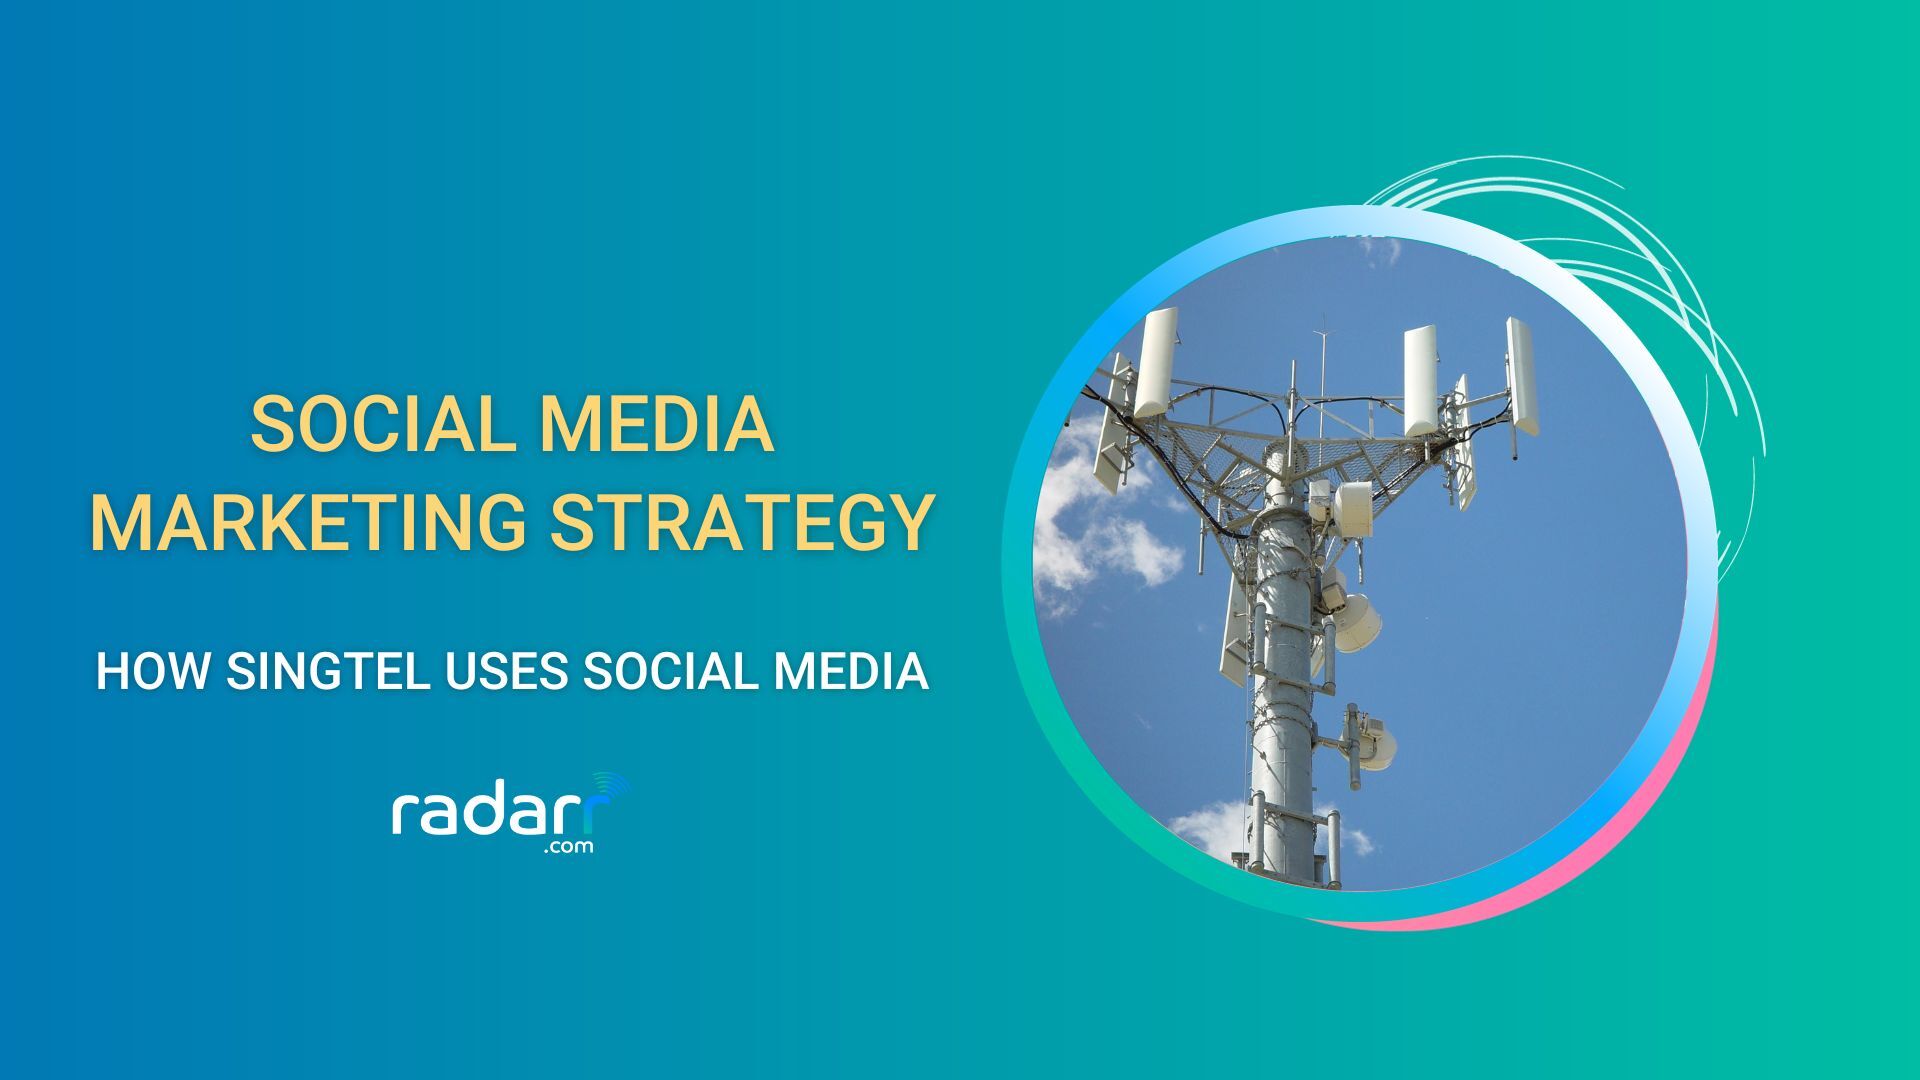 singtel social media marketing strategy